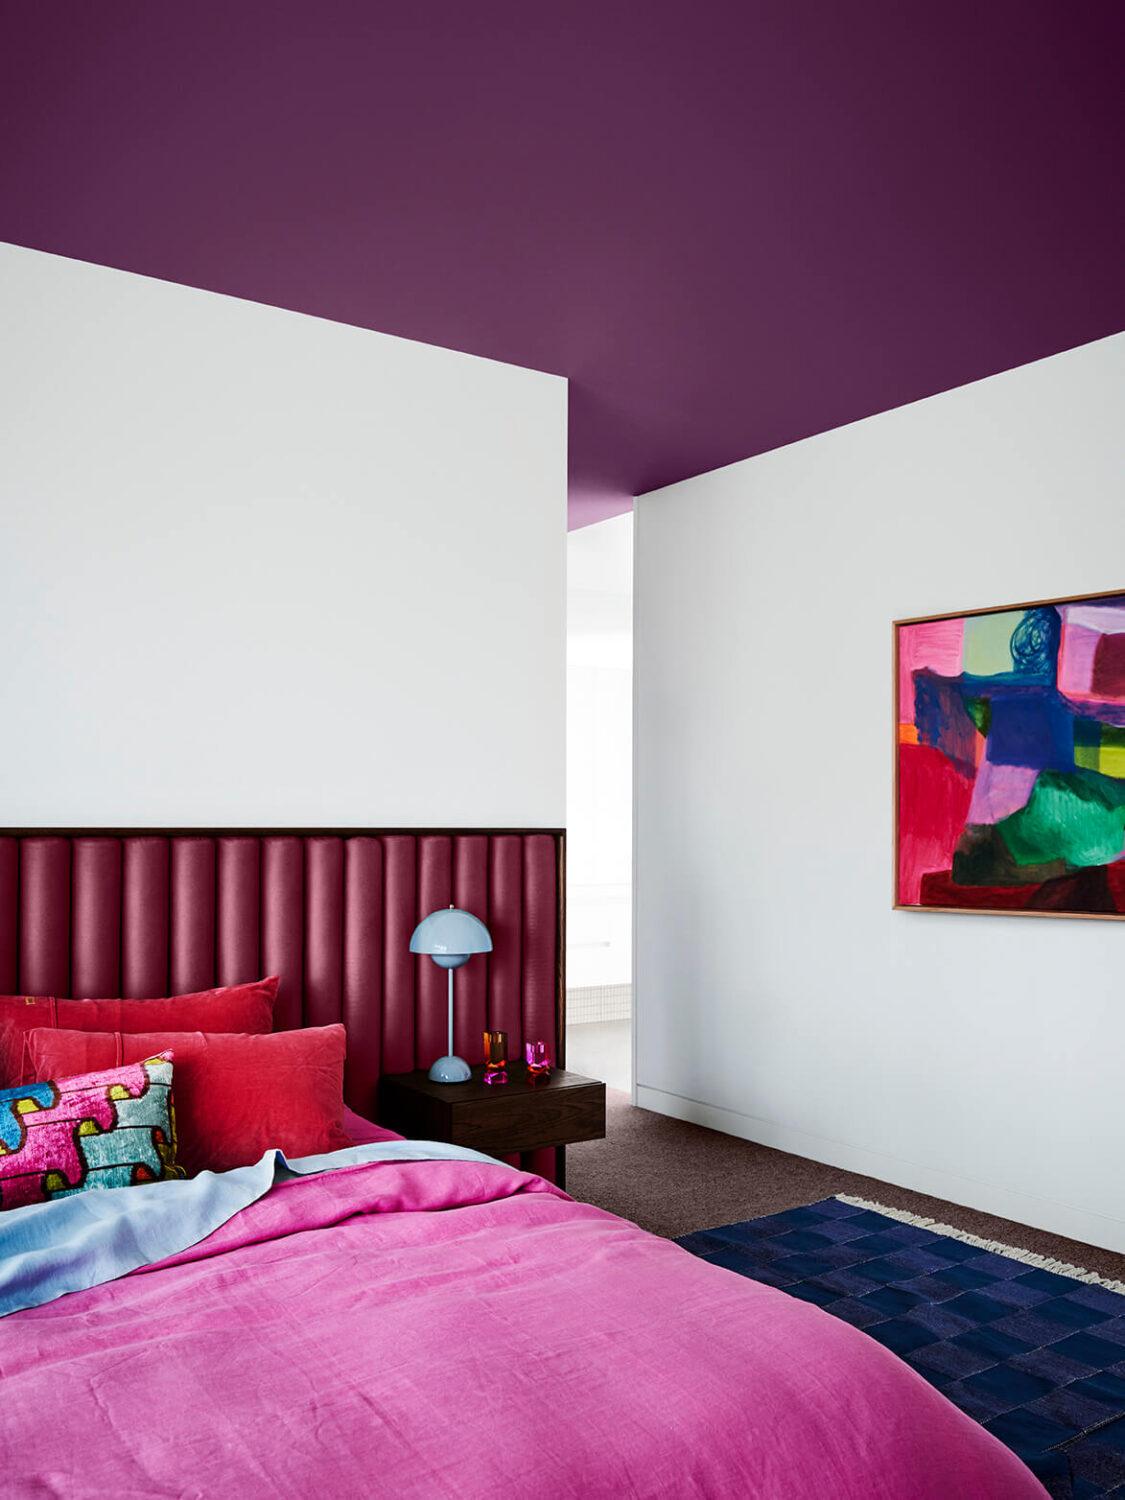 dulux revive color palette purple bedroom nordroom The Color Trends for 2023: Rich & Warm Natural Hues